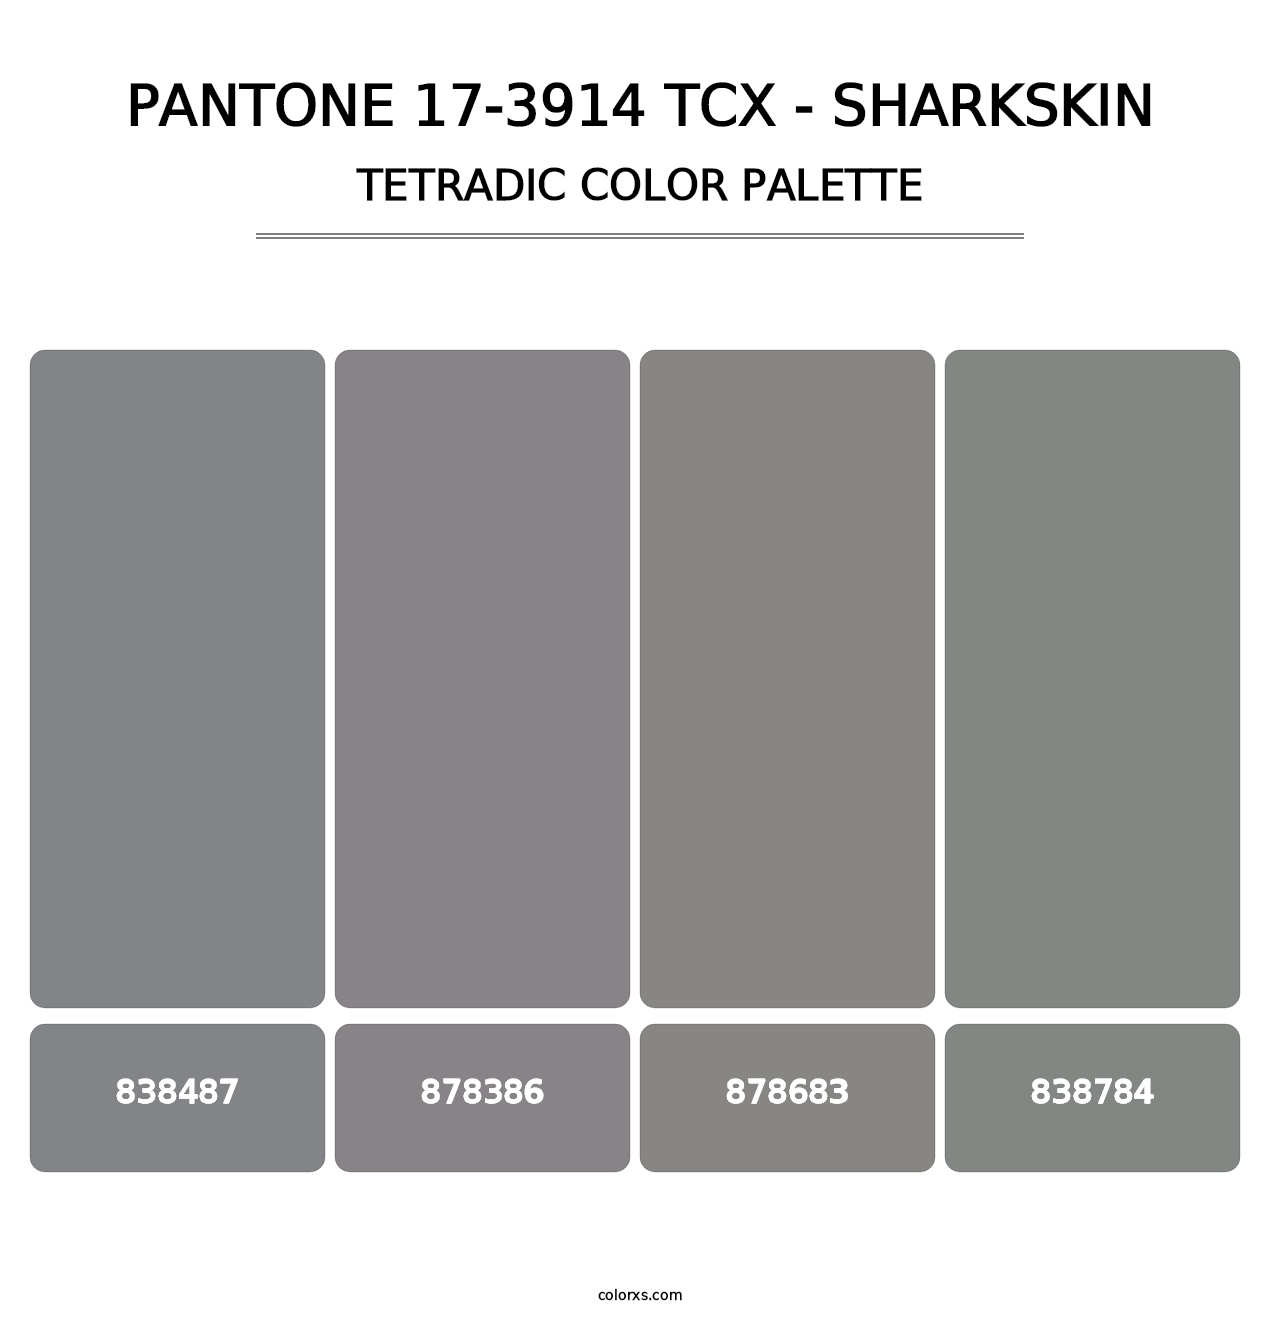 PANTONE 17-3914 TCX - Sharkskin - Tetradic Color Palette